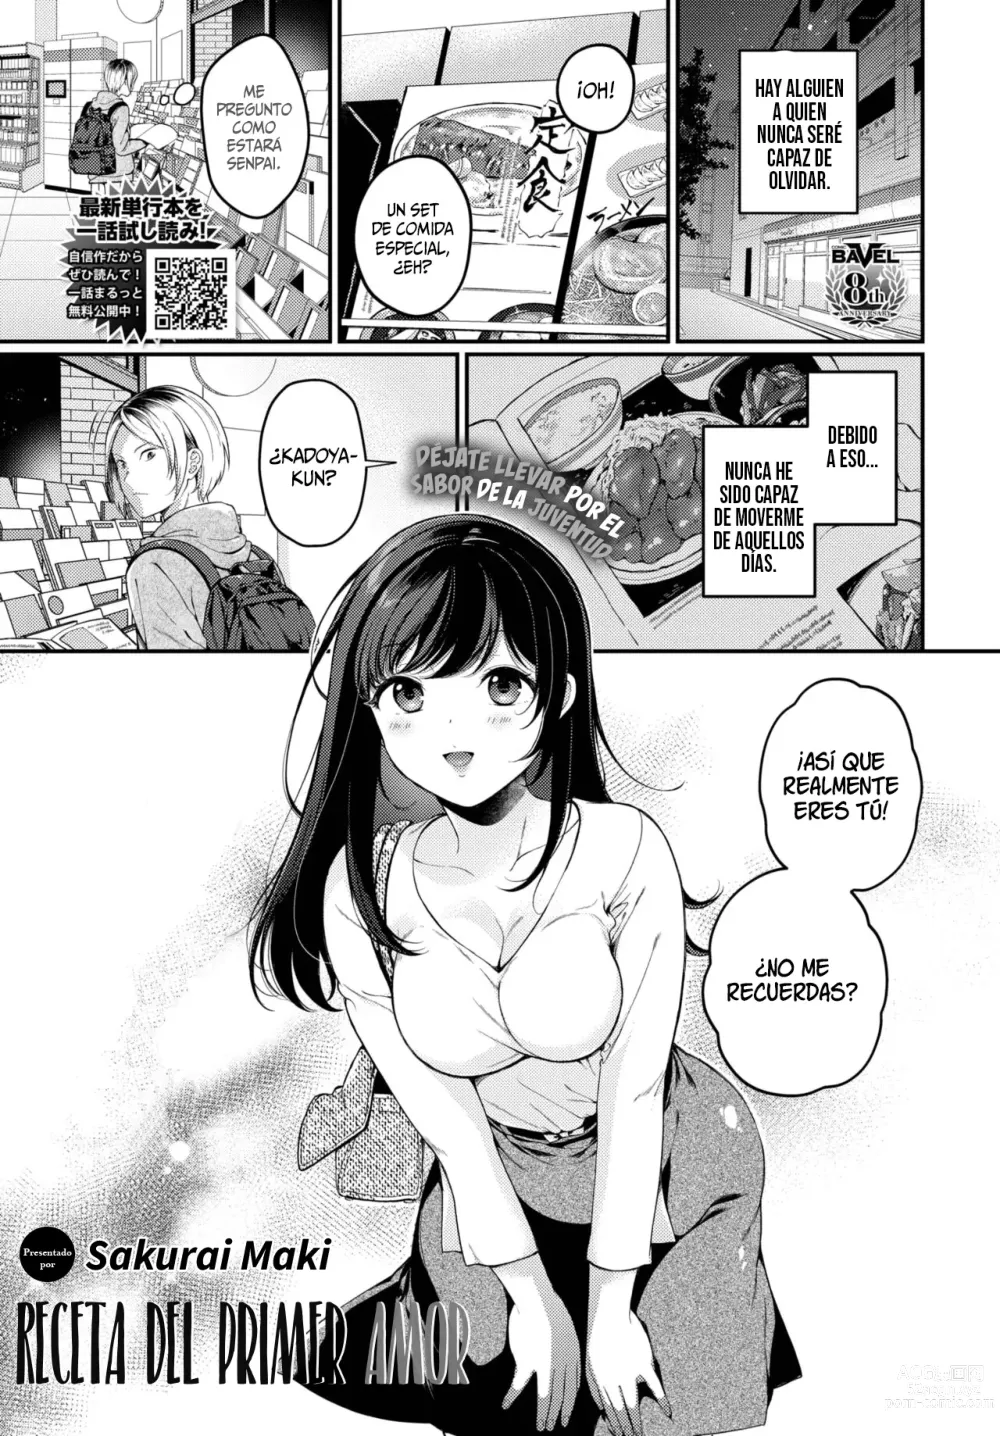 Page 1 of manga Receta del Primer Amor